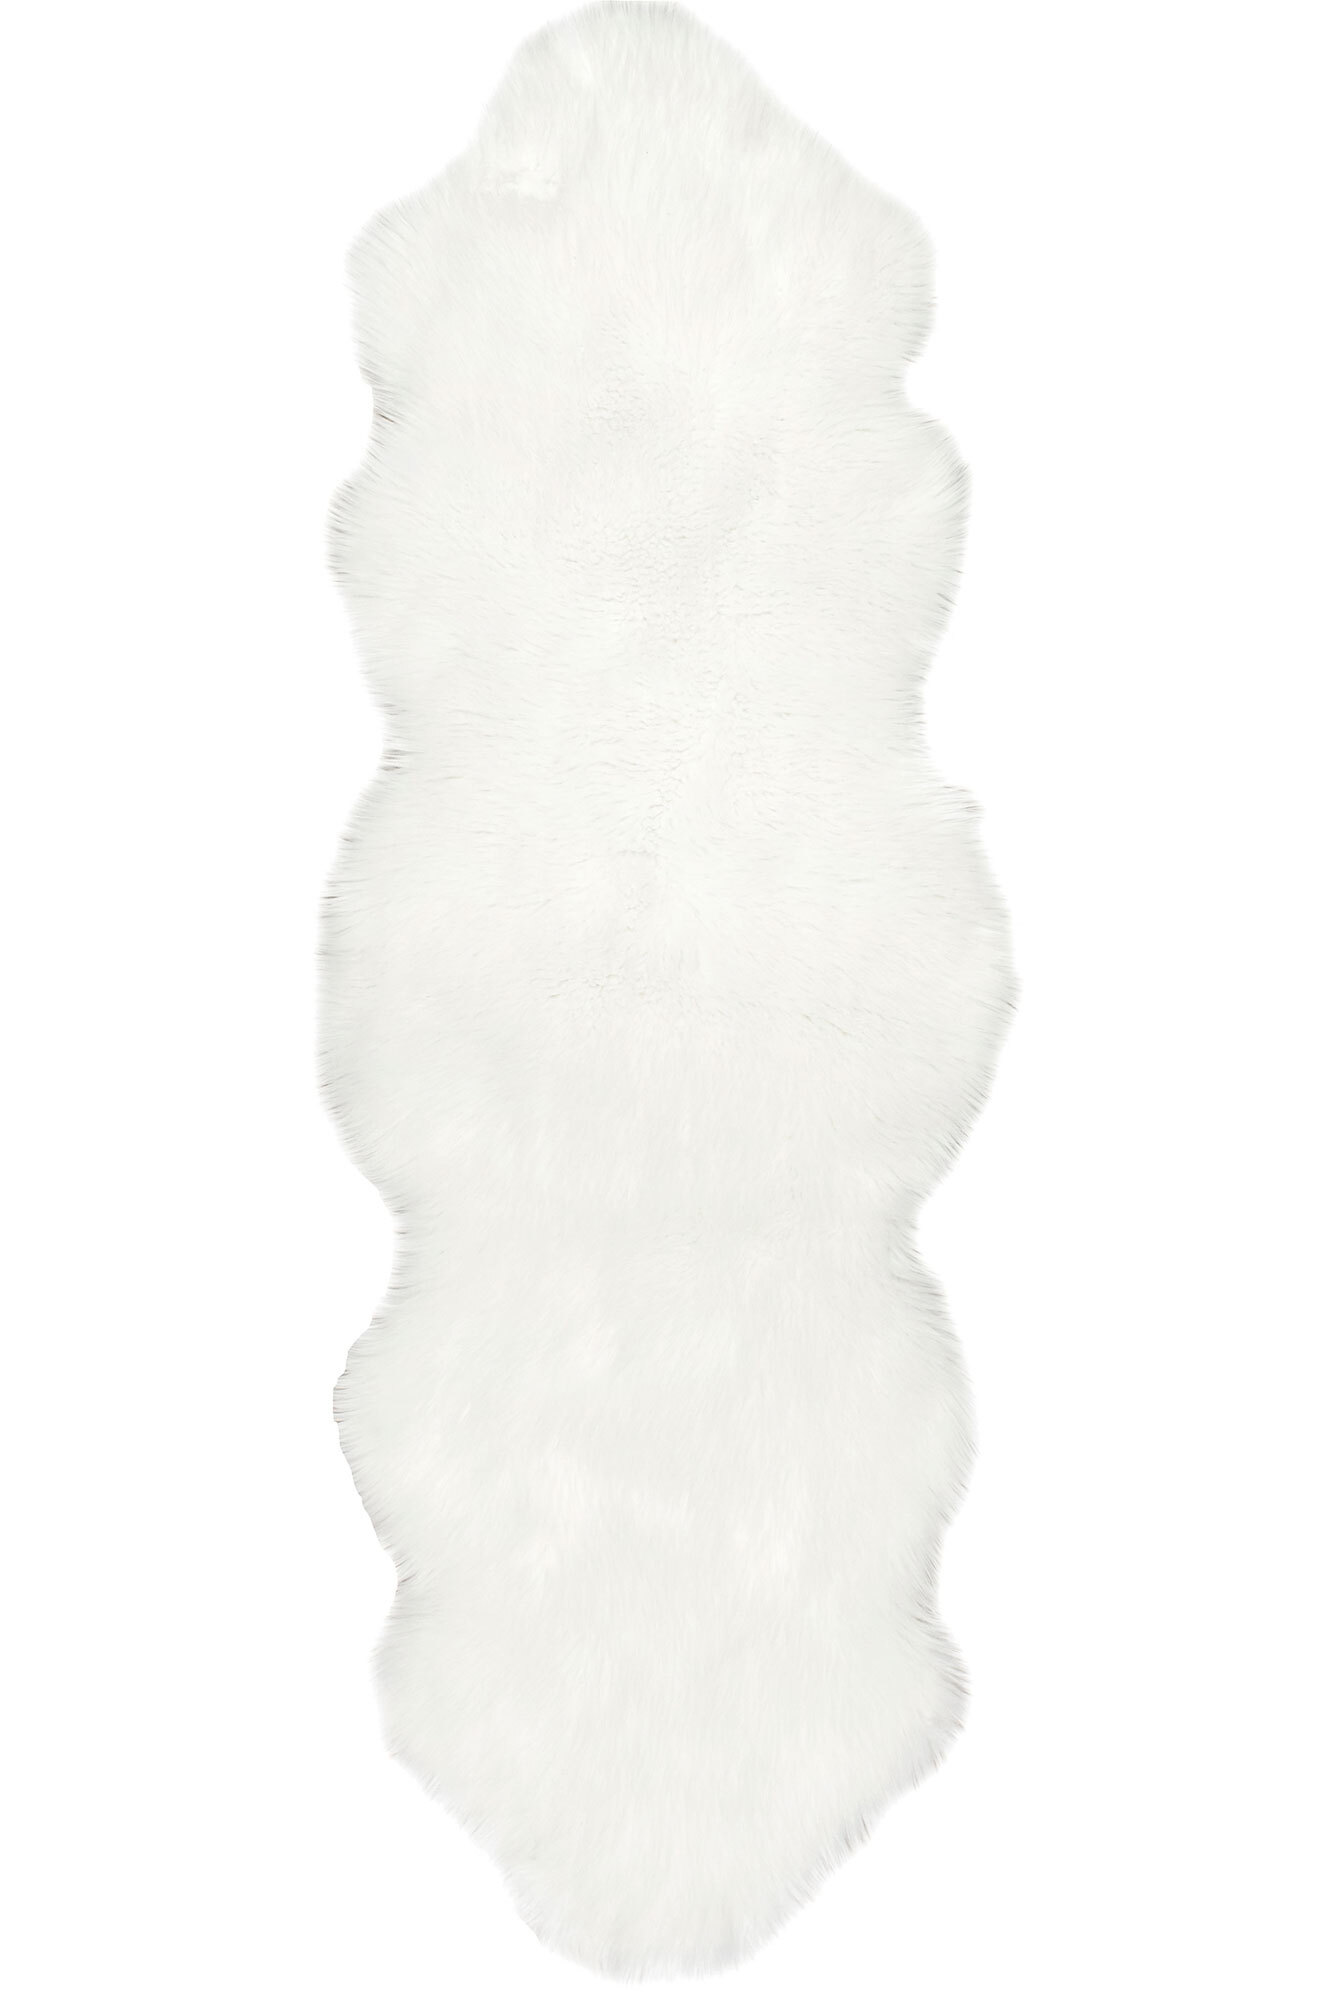 Faux Sheepskin Fluffy White Rug